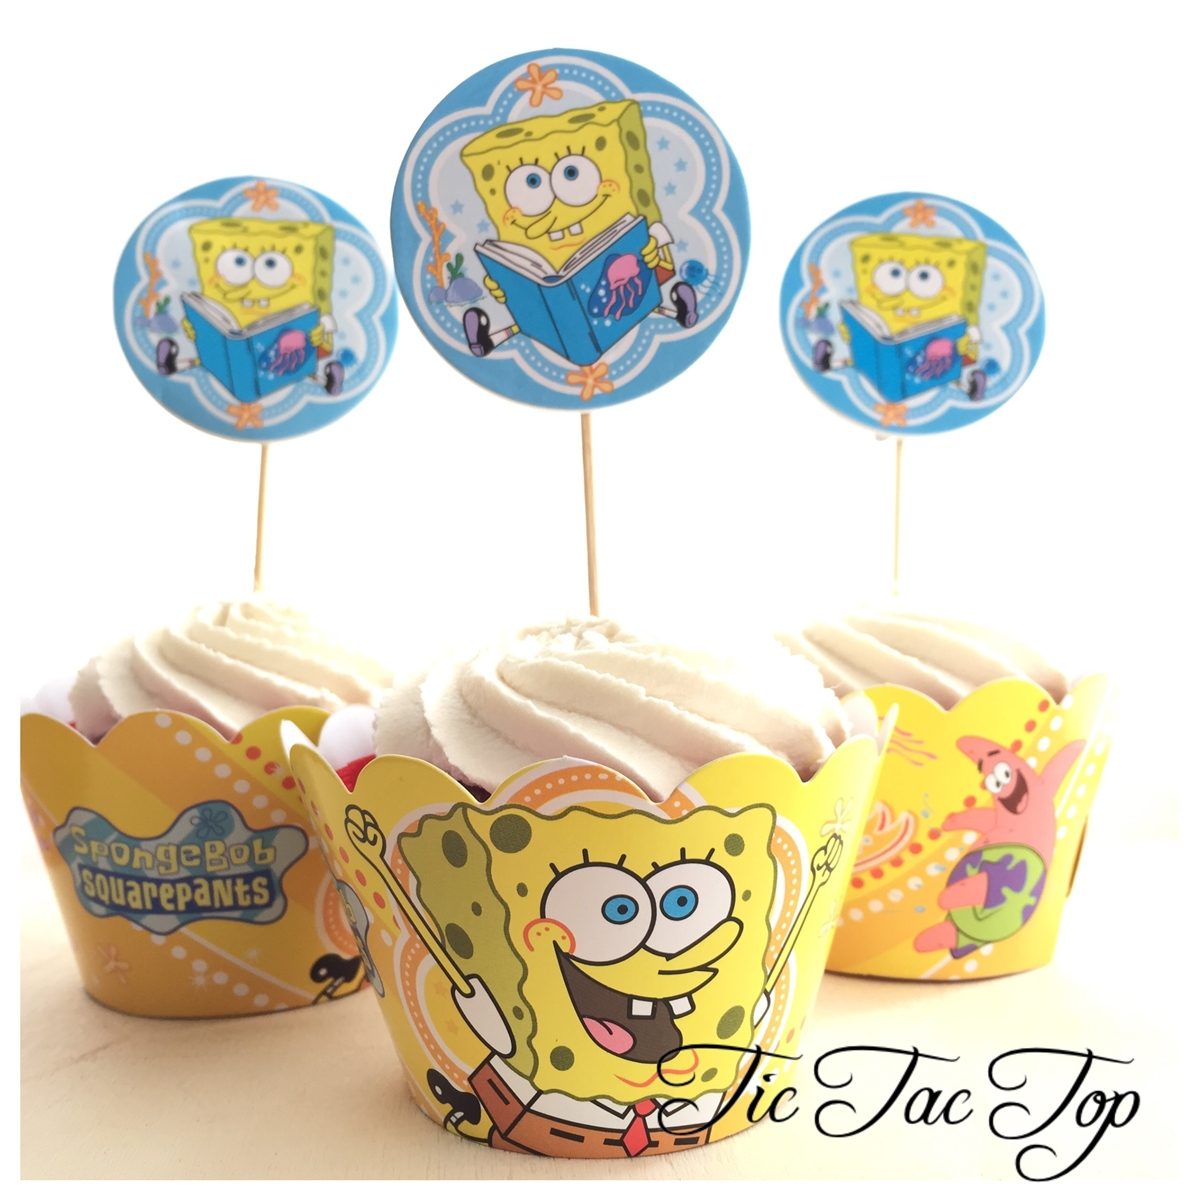 Spongebob SquarePants Cupcake Wrappers + Toppers